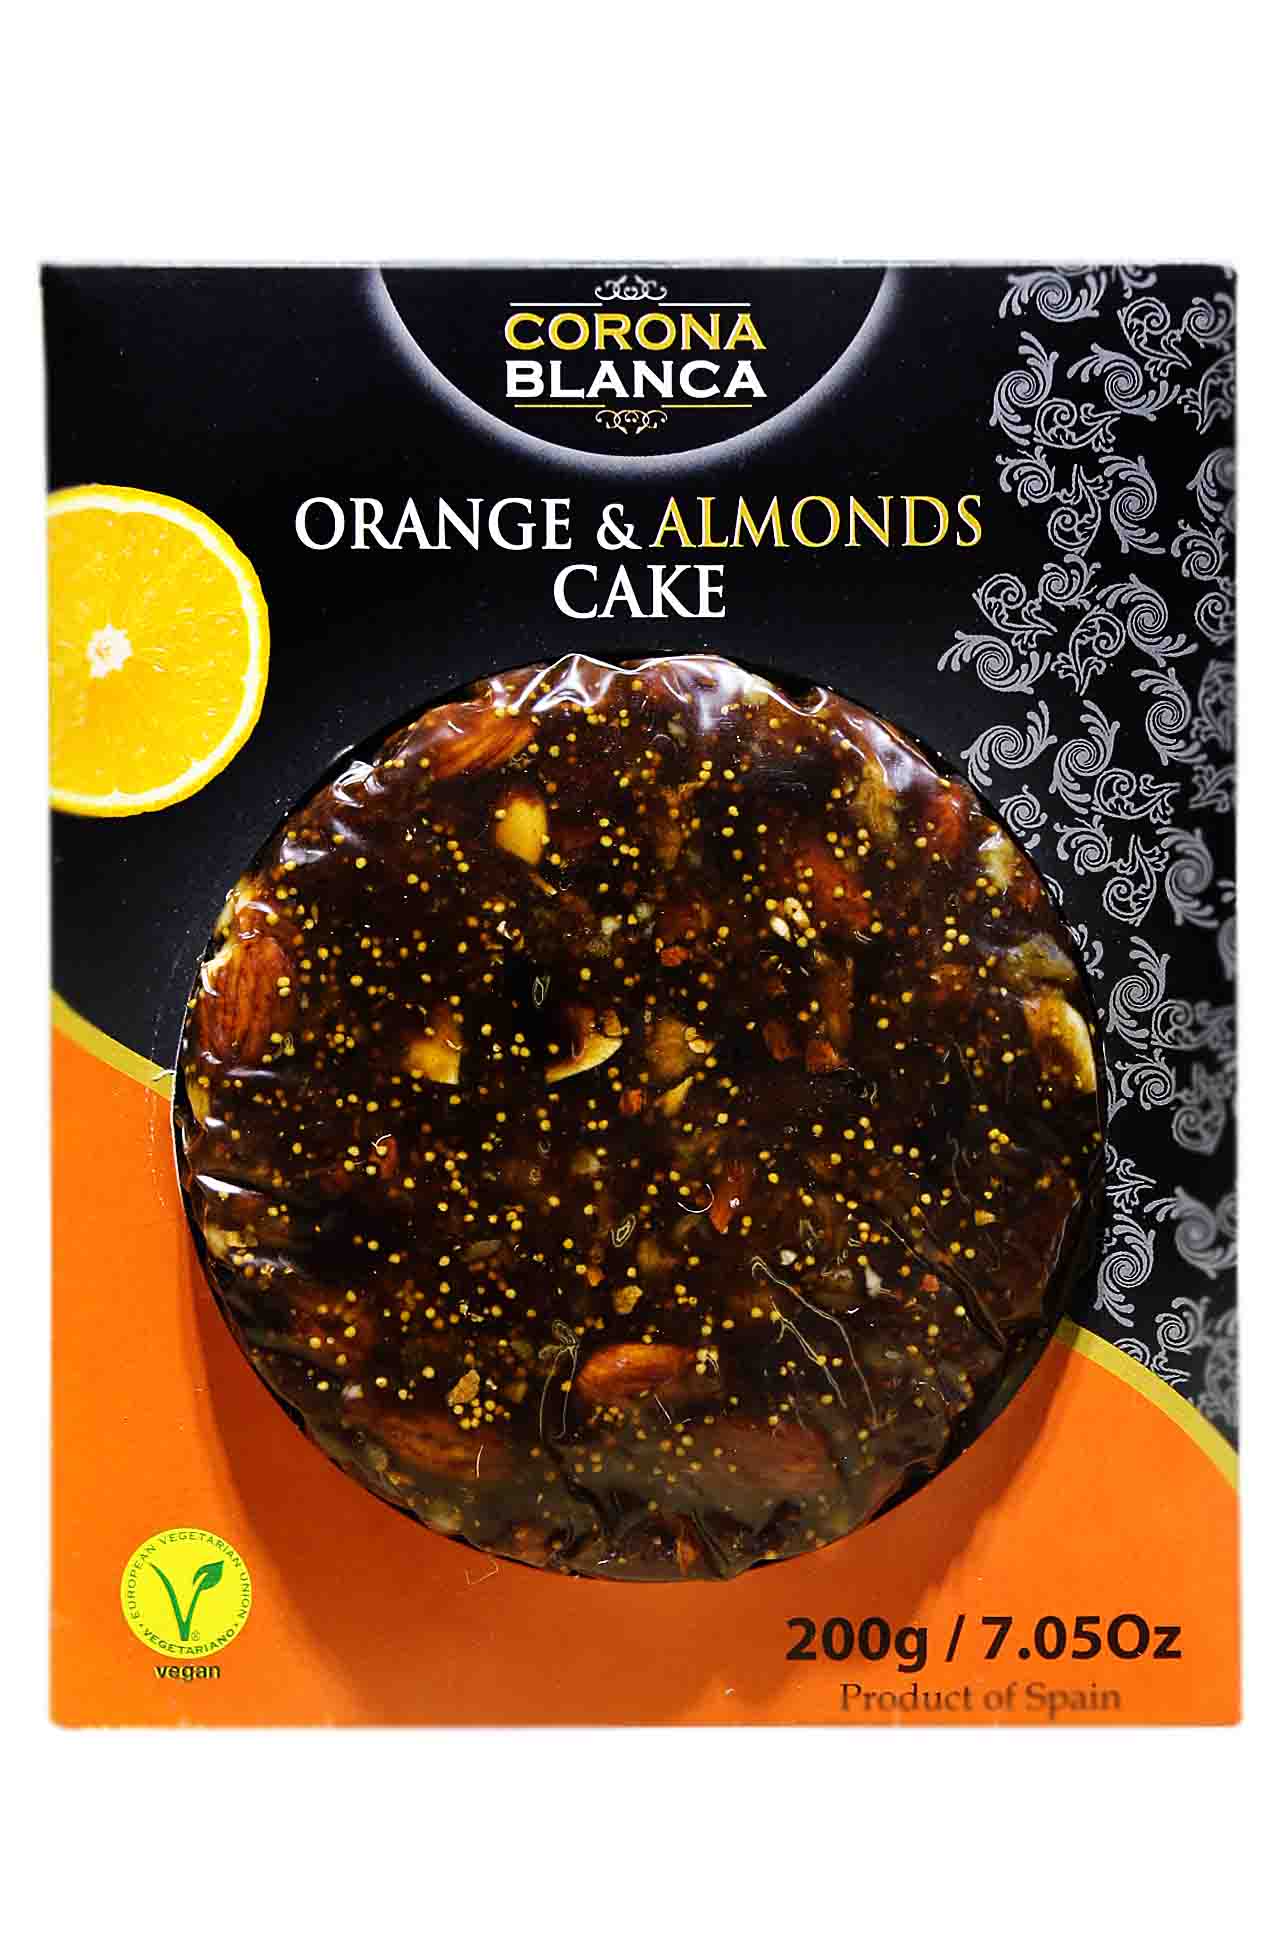 Orange and almond cake